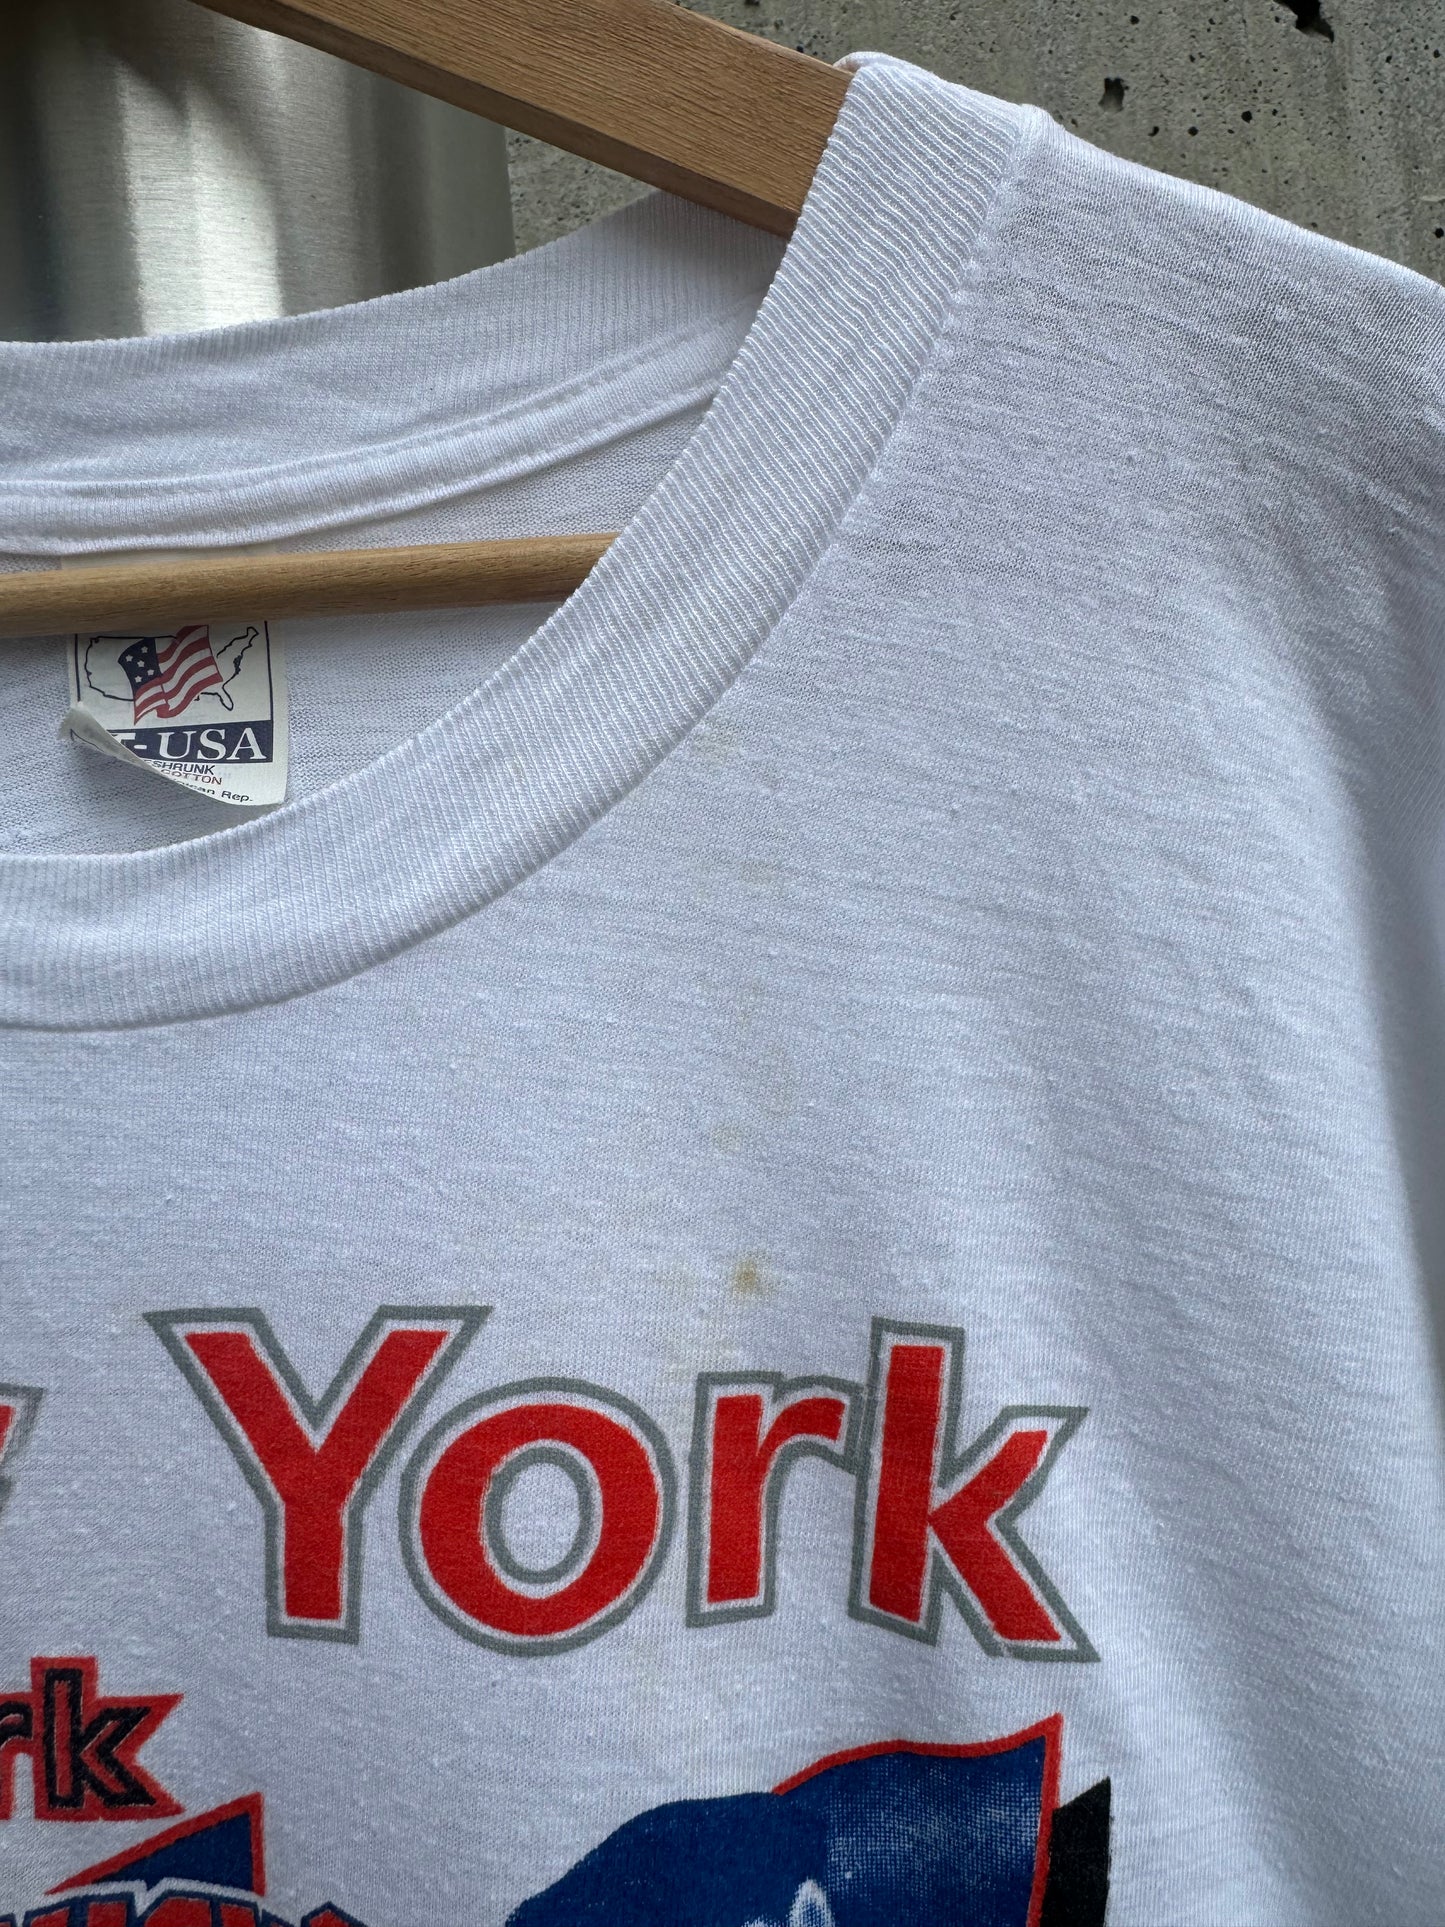 Vintage New York Knicks Ewing Starks T-Shirt Size XL